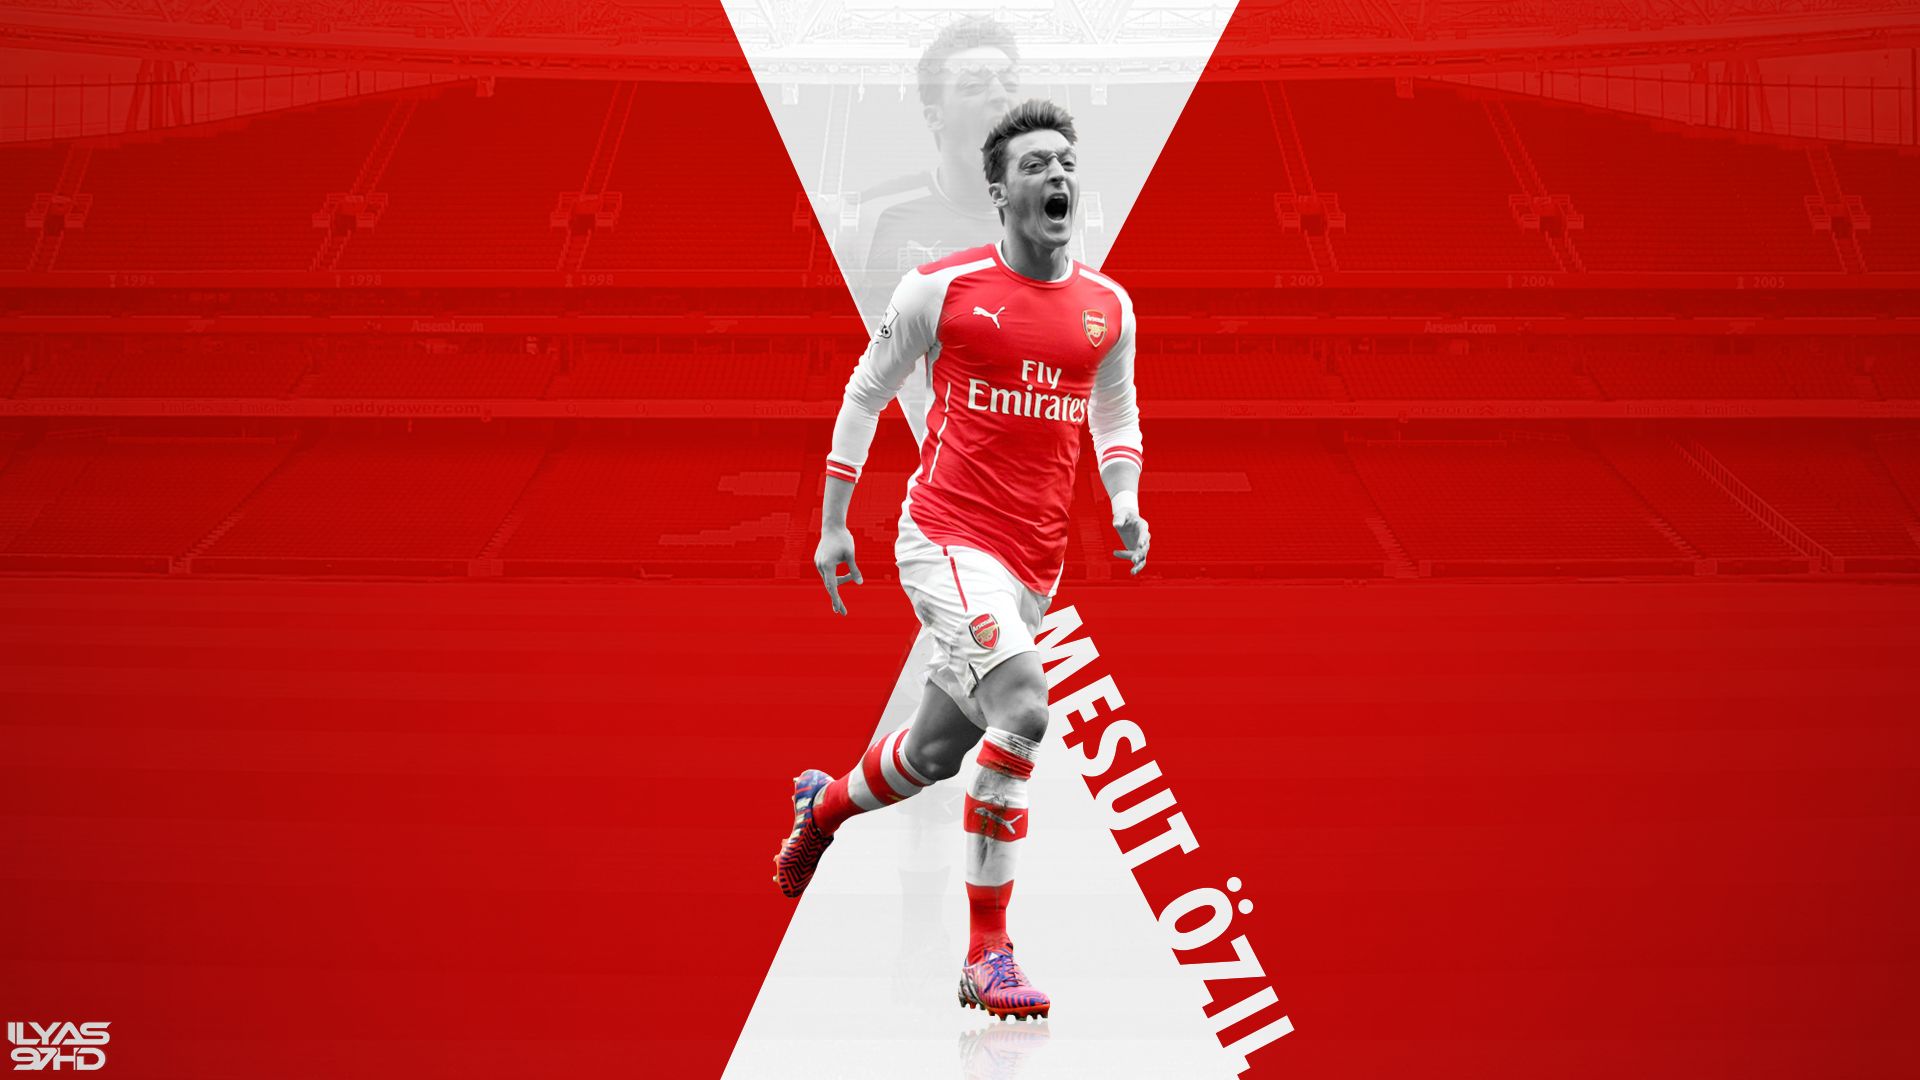 Descarga gratuita de fondo de pantalla para móvil de Fútbol, Mesut Özil, Deporte, Arsenal Fc.